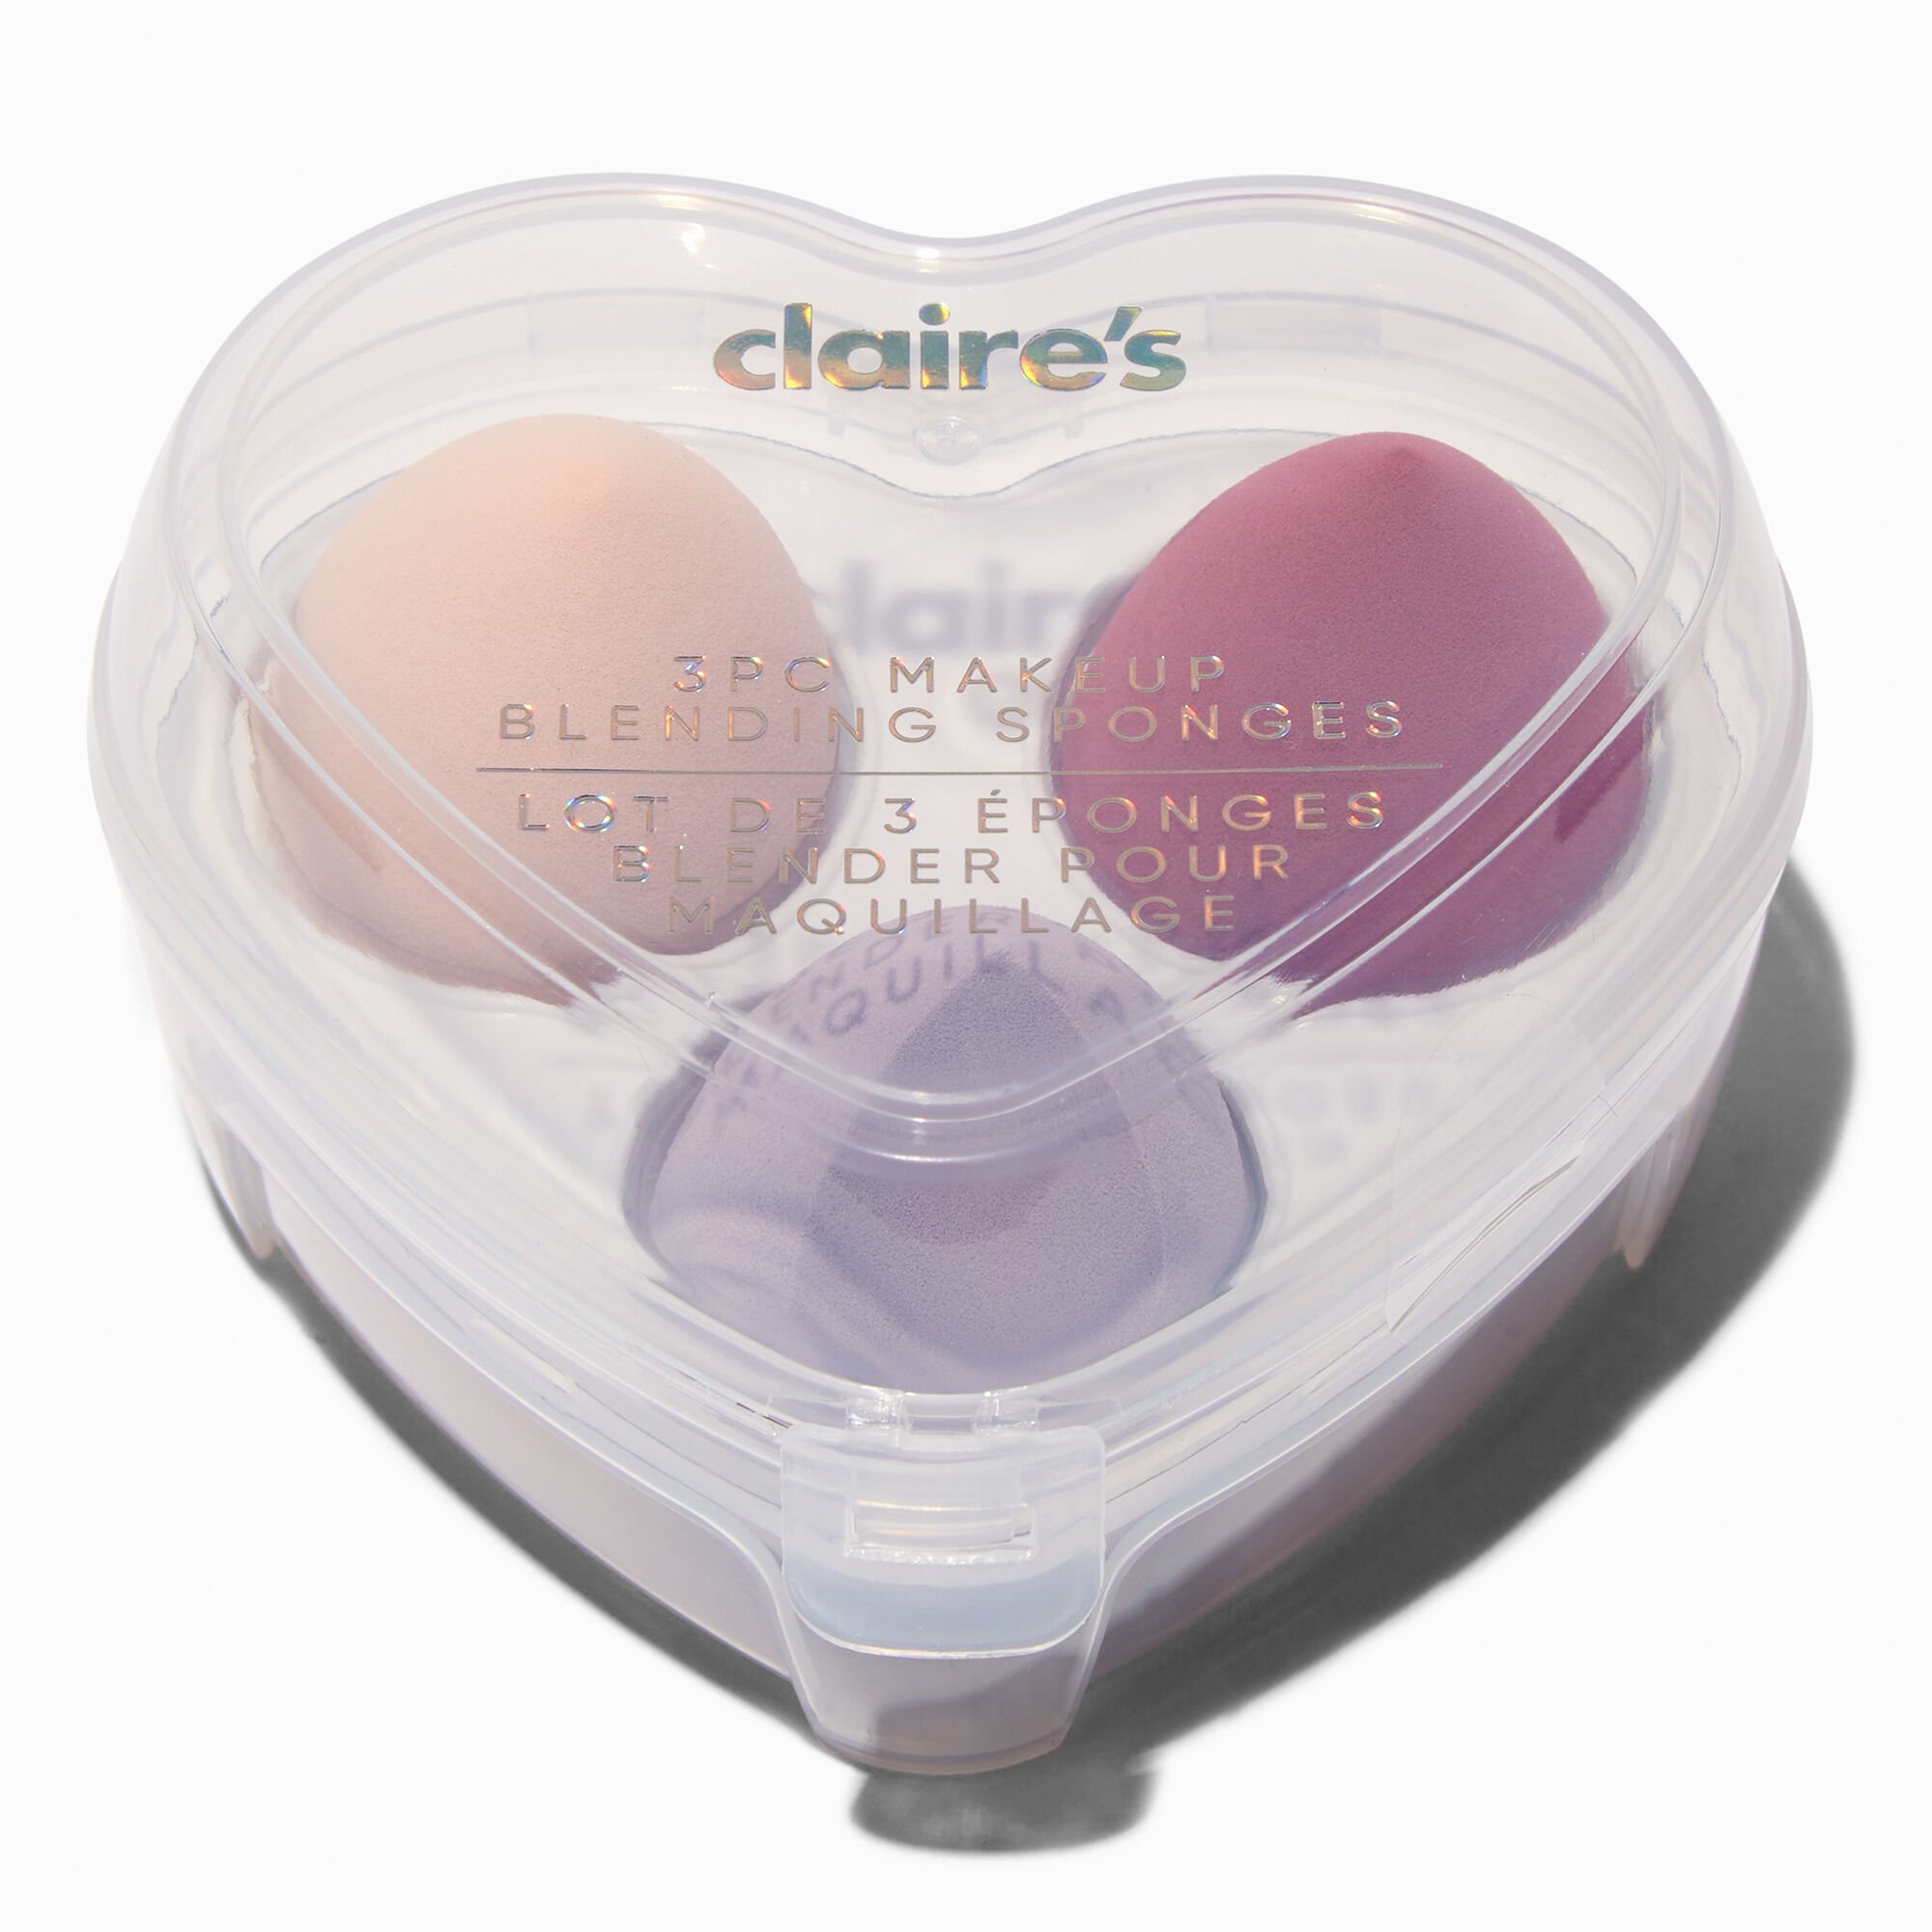 View Claires Heart Makeup Sponge Set 3 Pack information